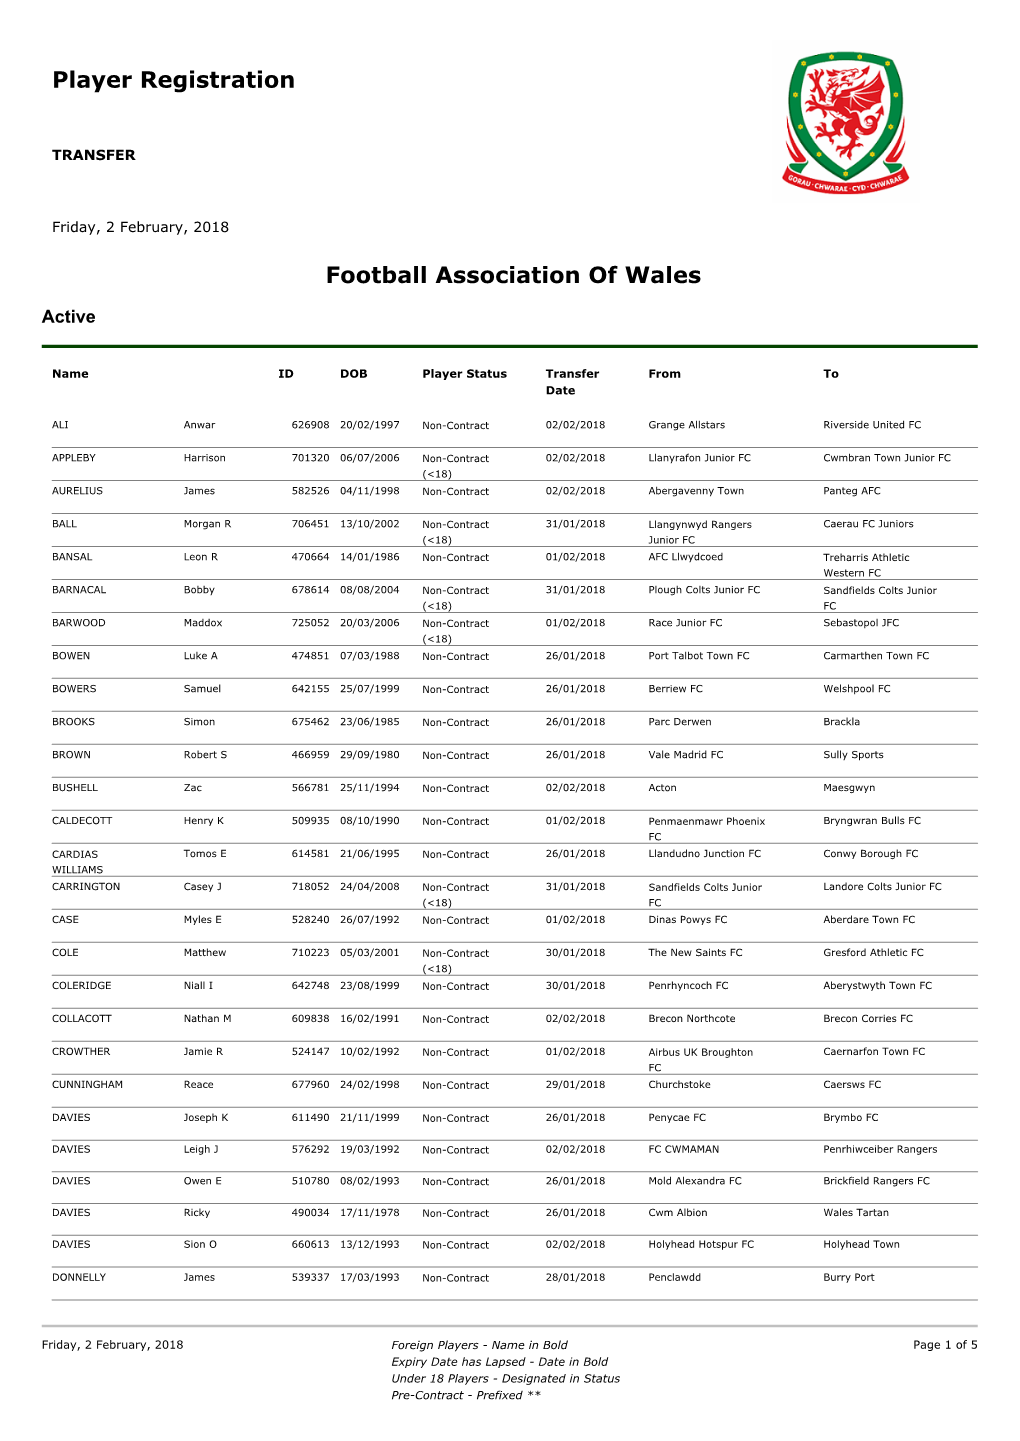 Player Registration Football Association of Wales